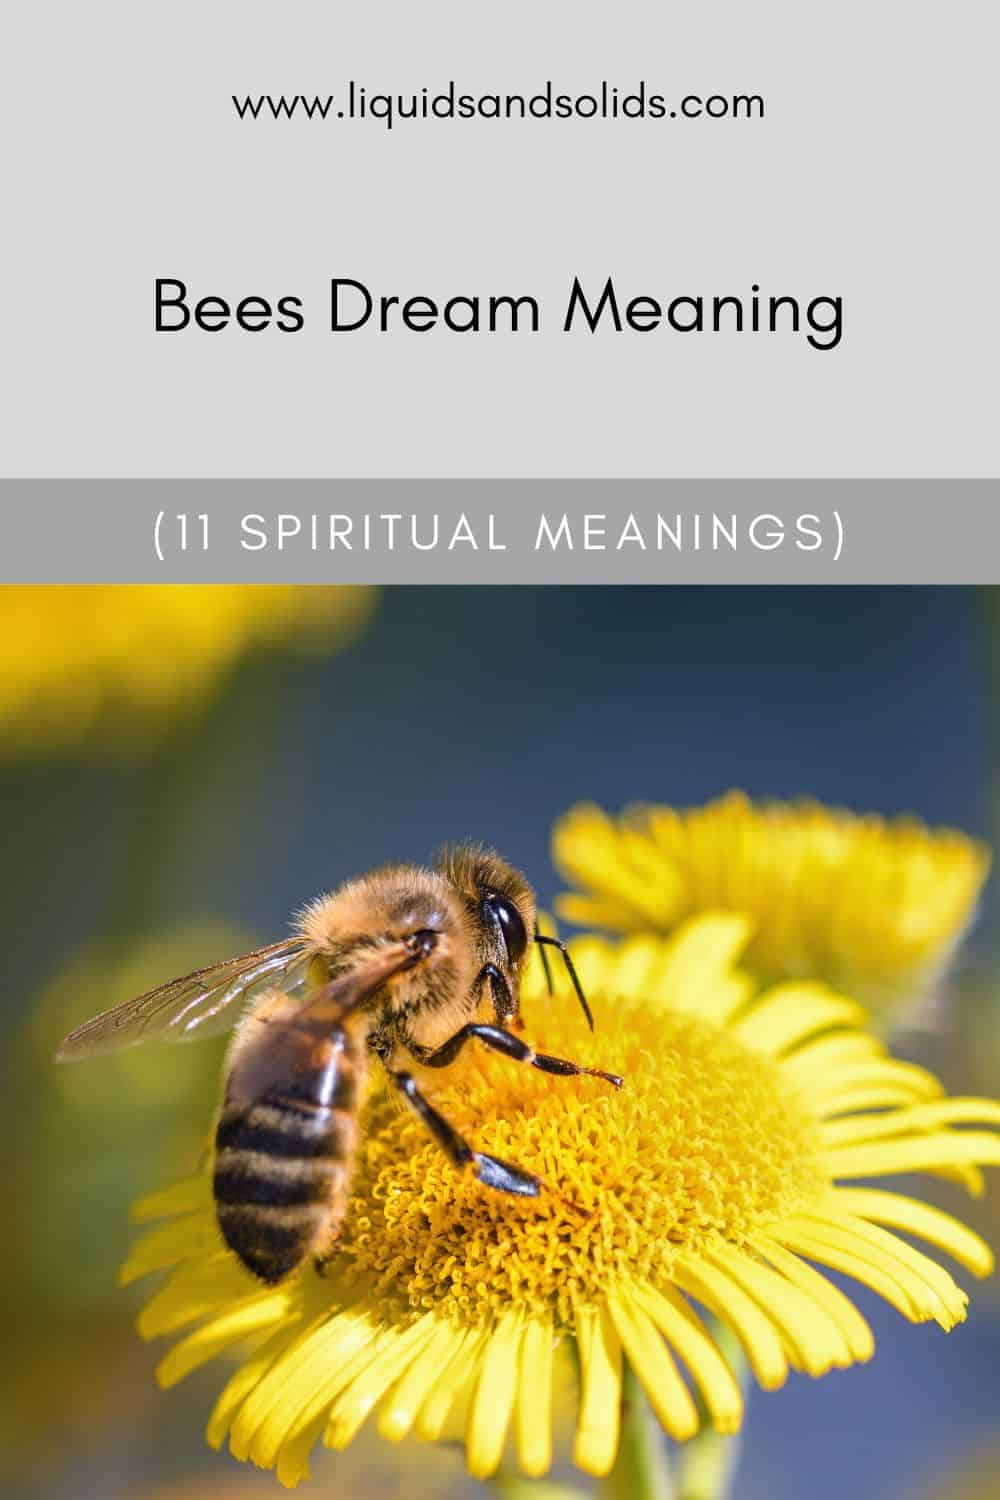  Rêver d'abeilles (11 significations spirituelles)